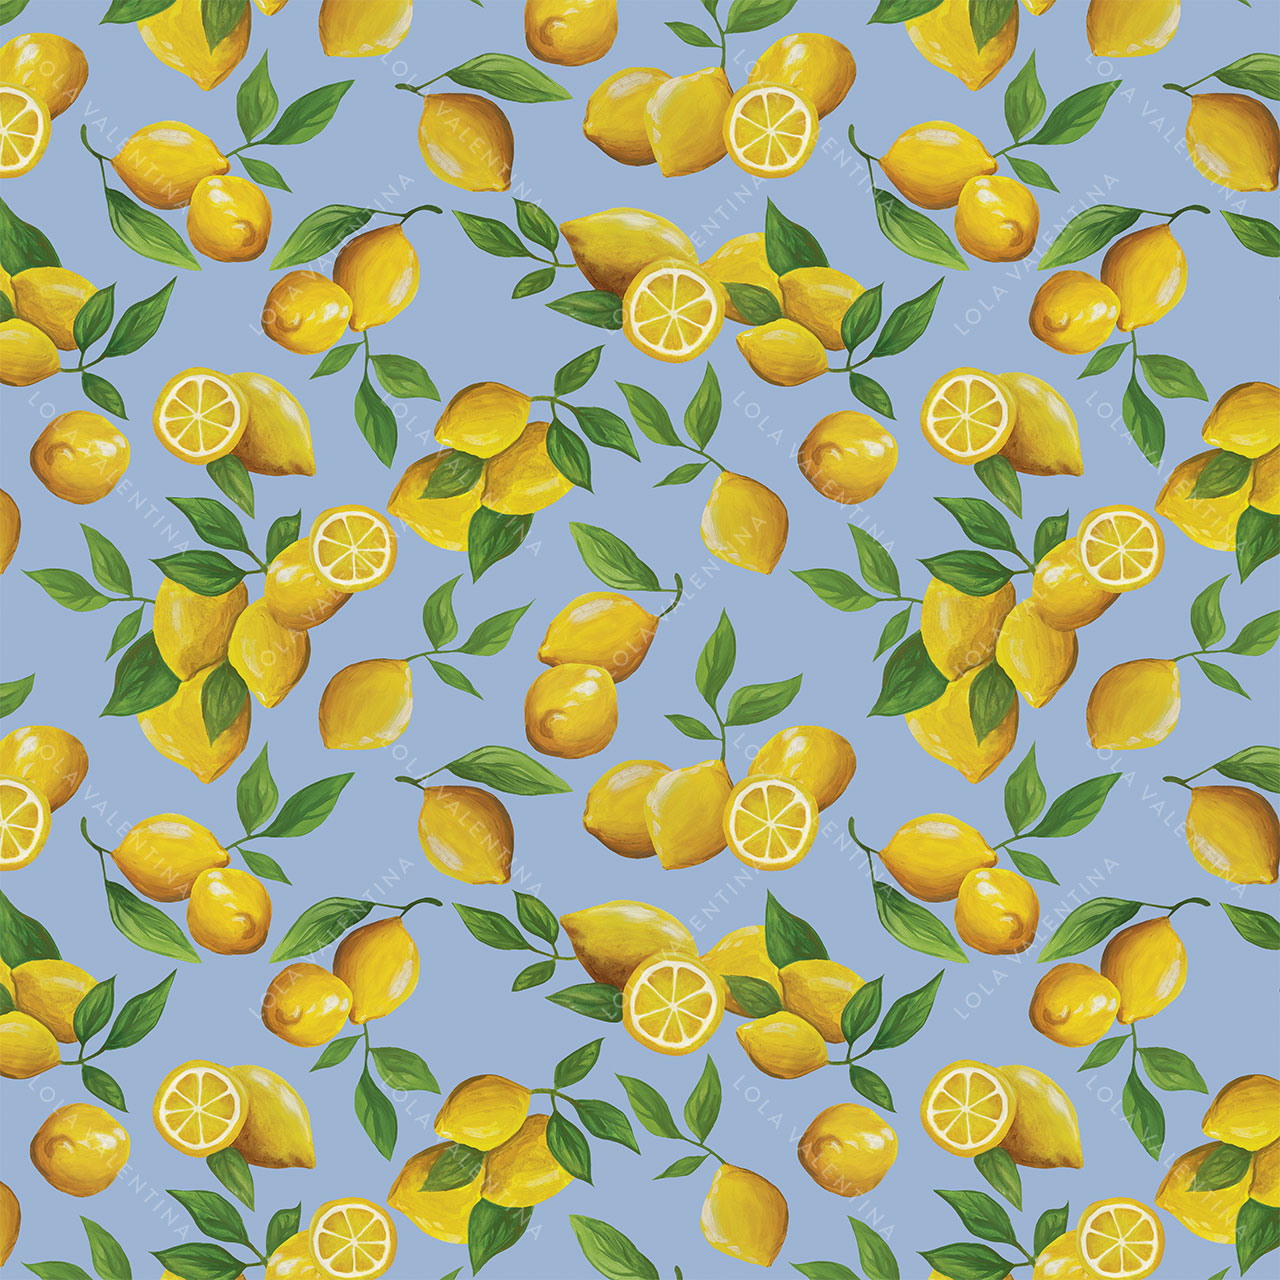 Lemons-Leaves-Blue-Fruits-Citrus-Pattern